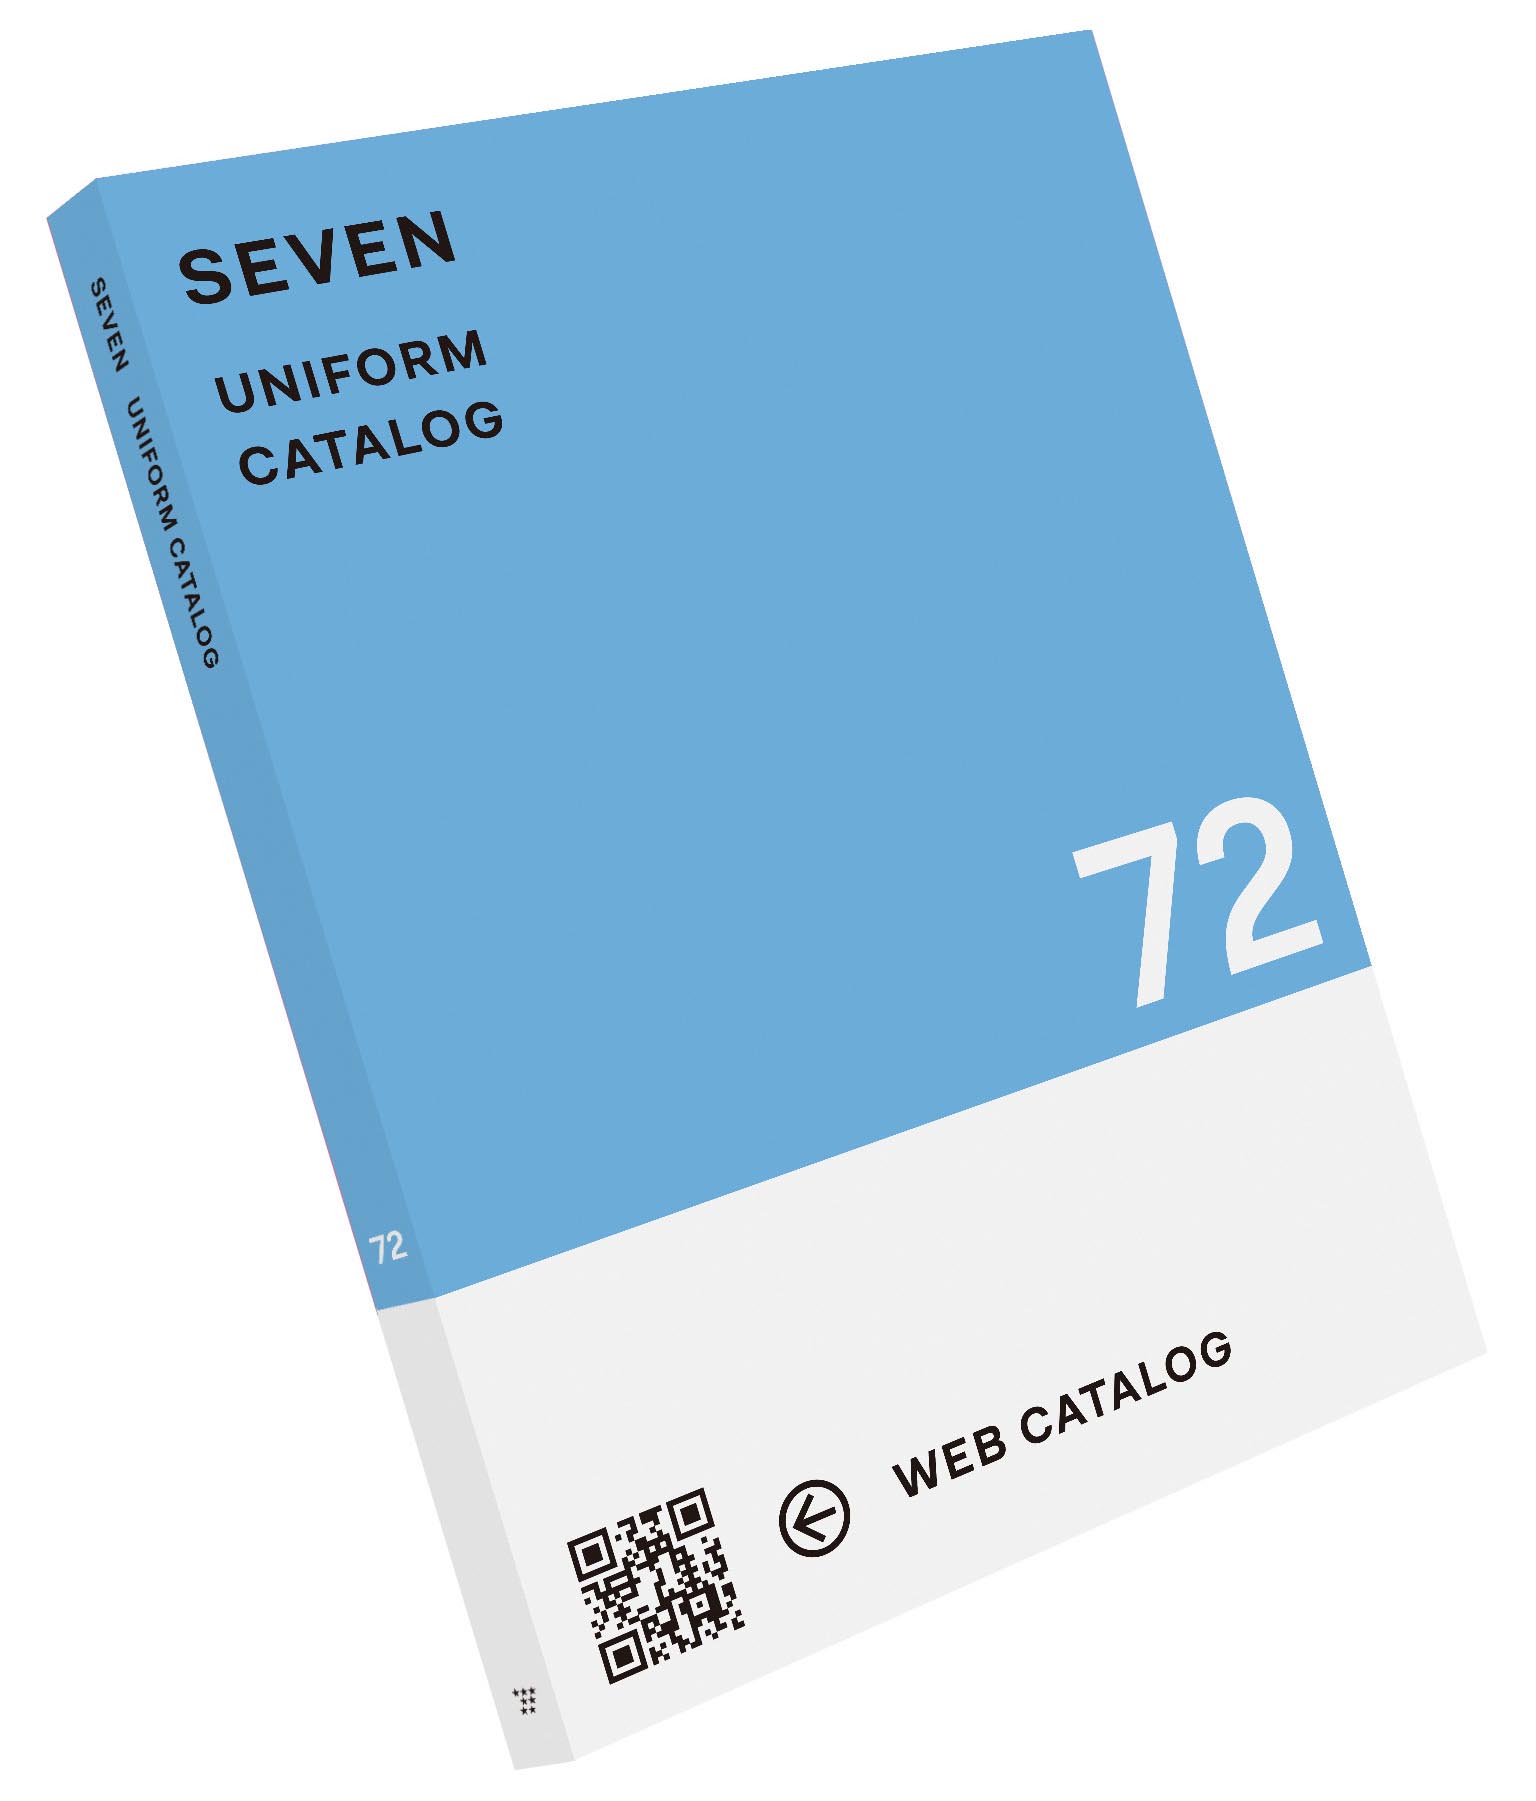 SEVEN UNIFOM CATALOG 72